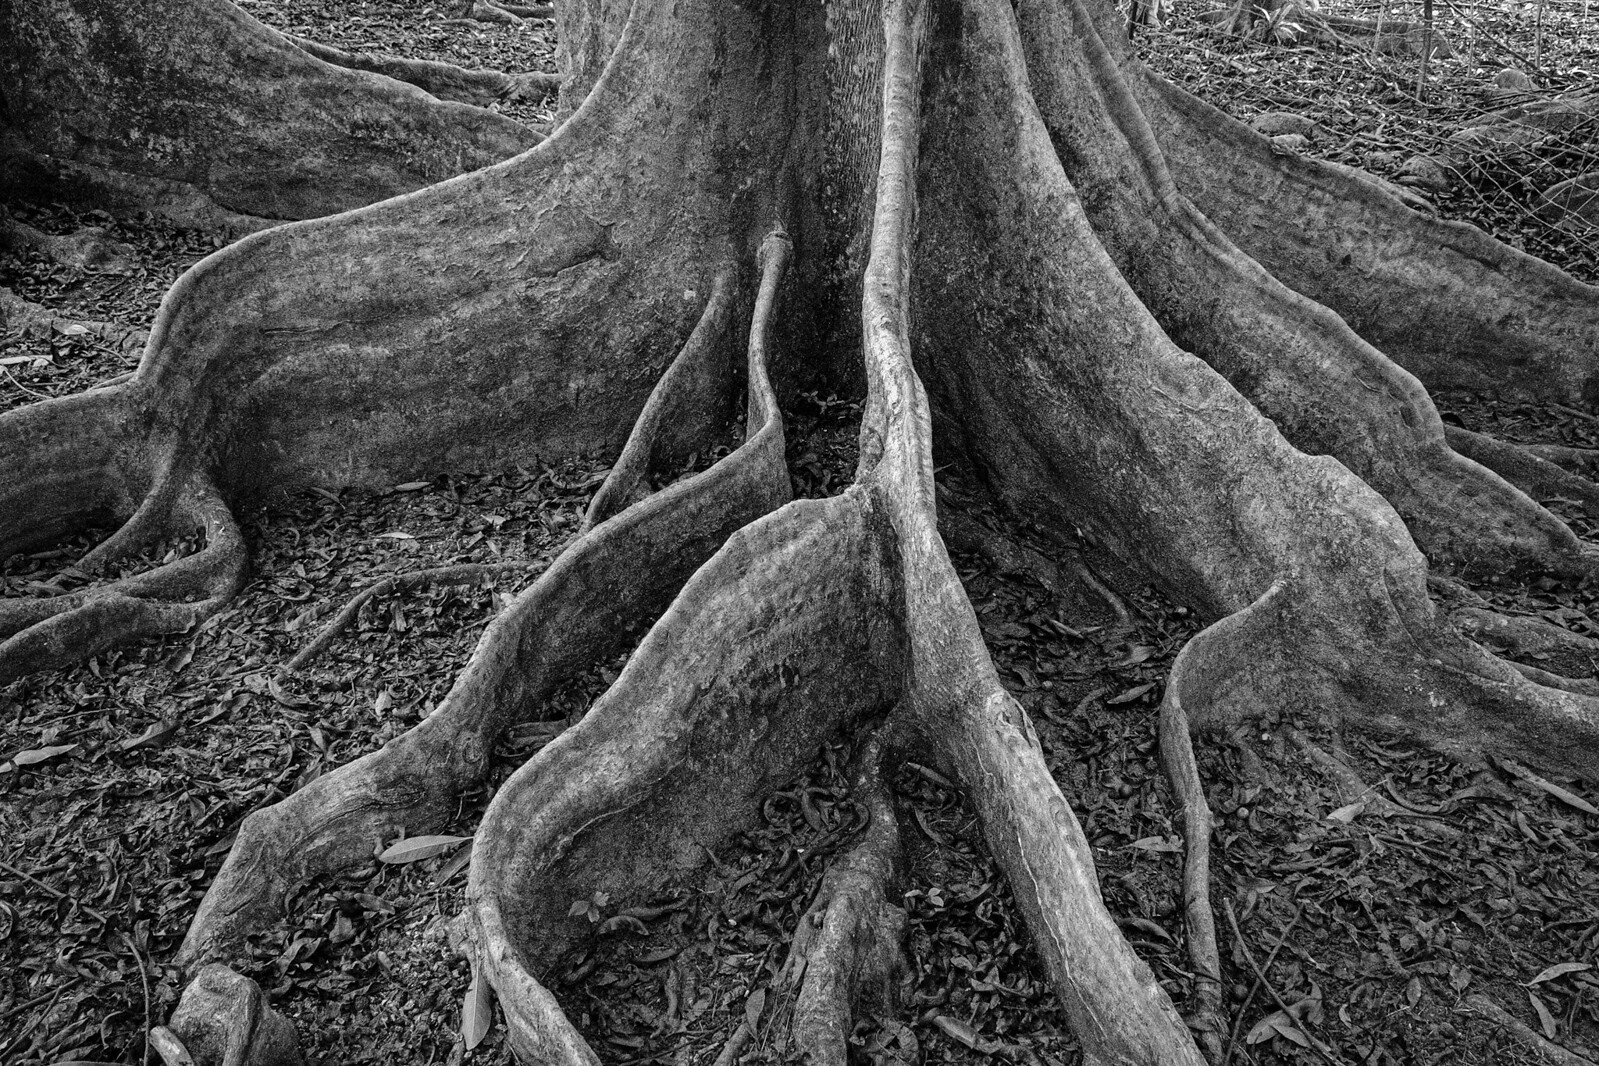 Roots in the Sacred Rudraksha Forest